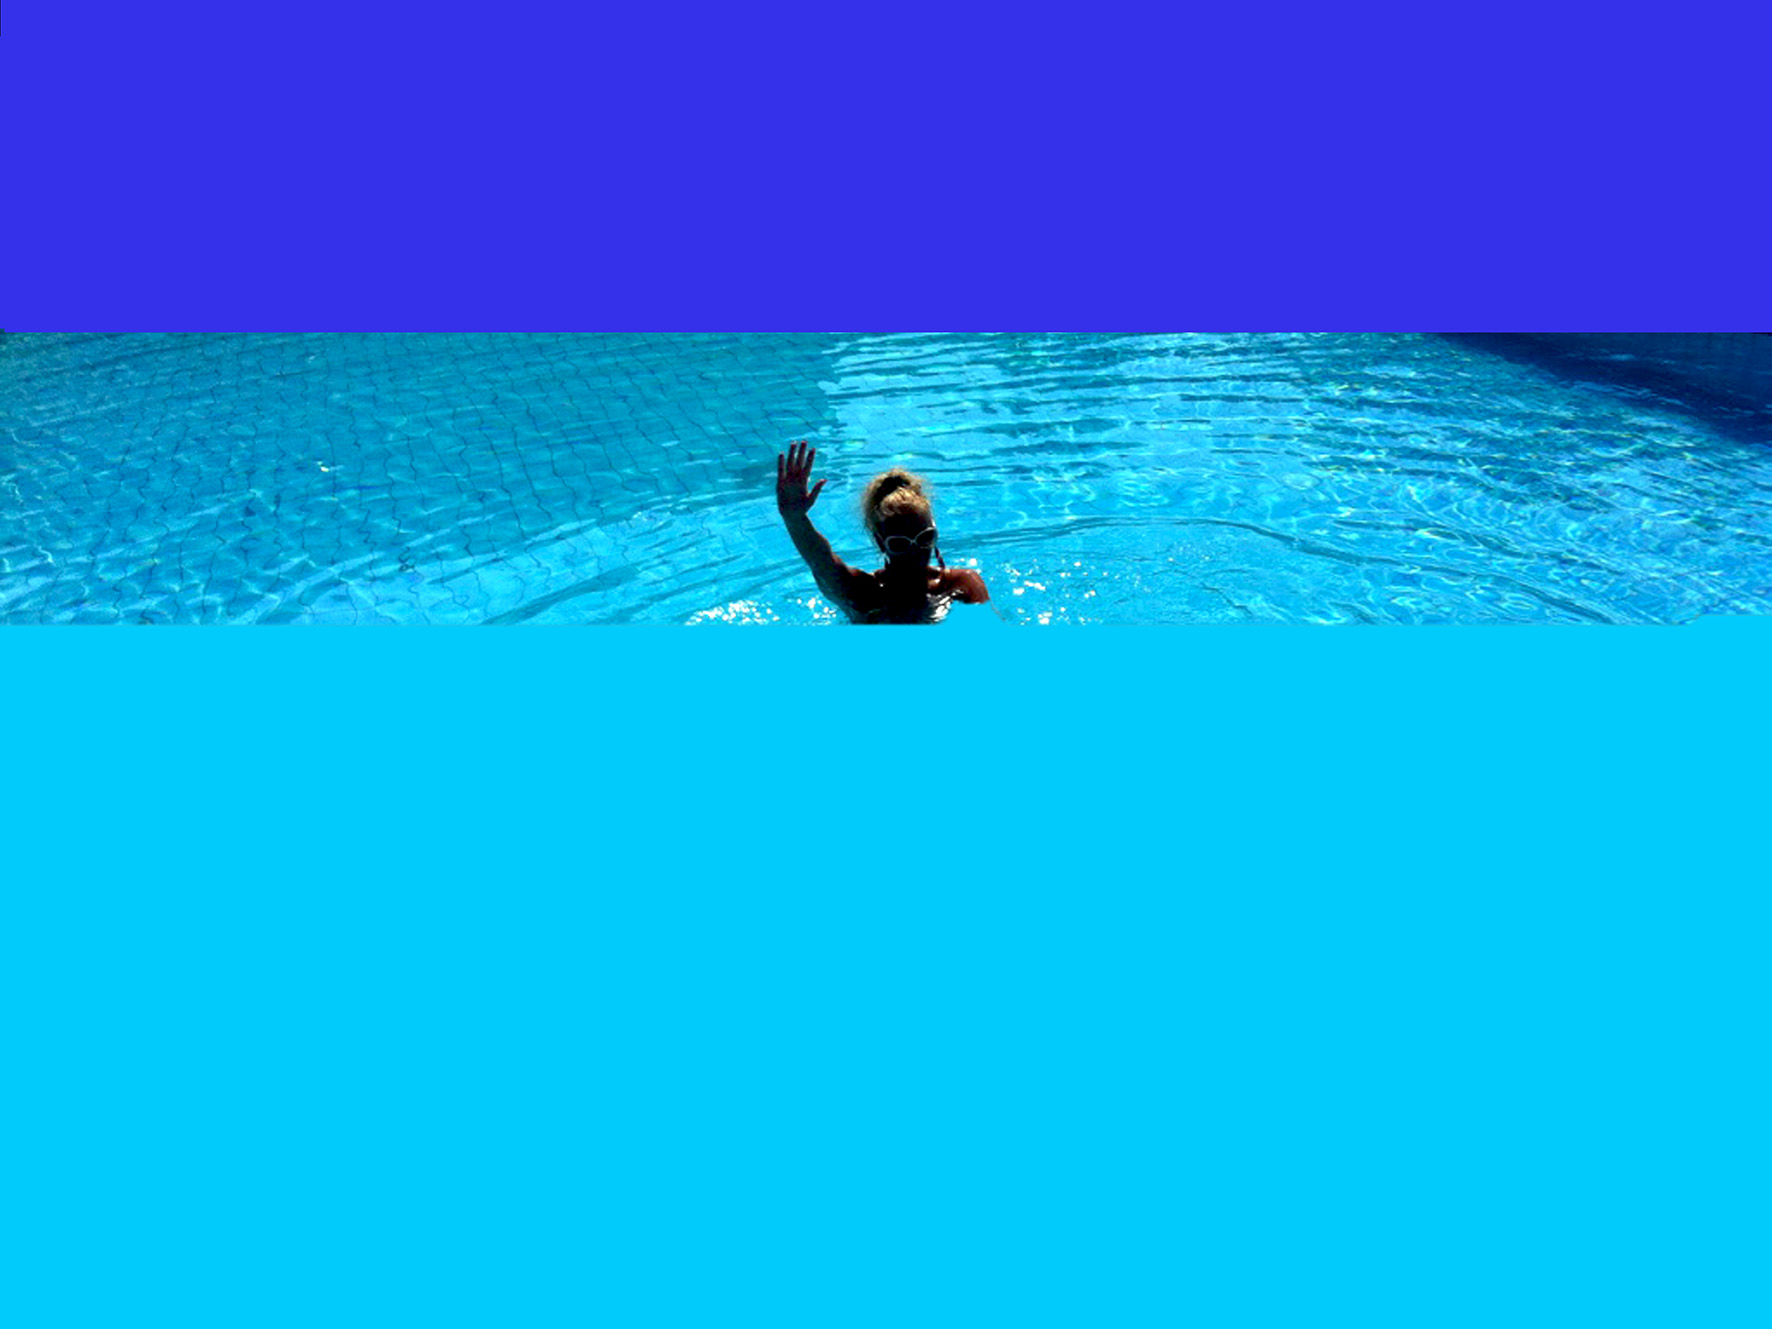 Luigi Viola, Swimming pool corrupted pic, laserprint on plexiglass / aluminium, 75x100 cm, 2017